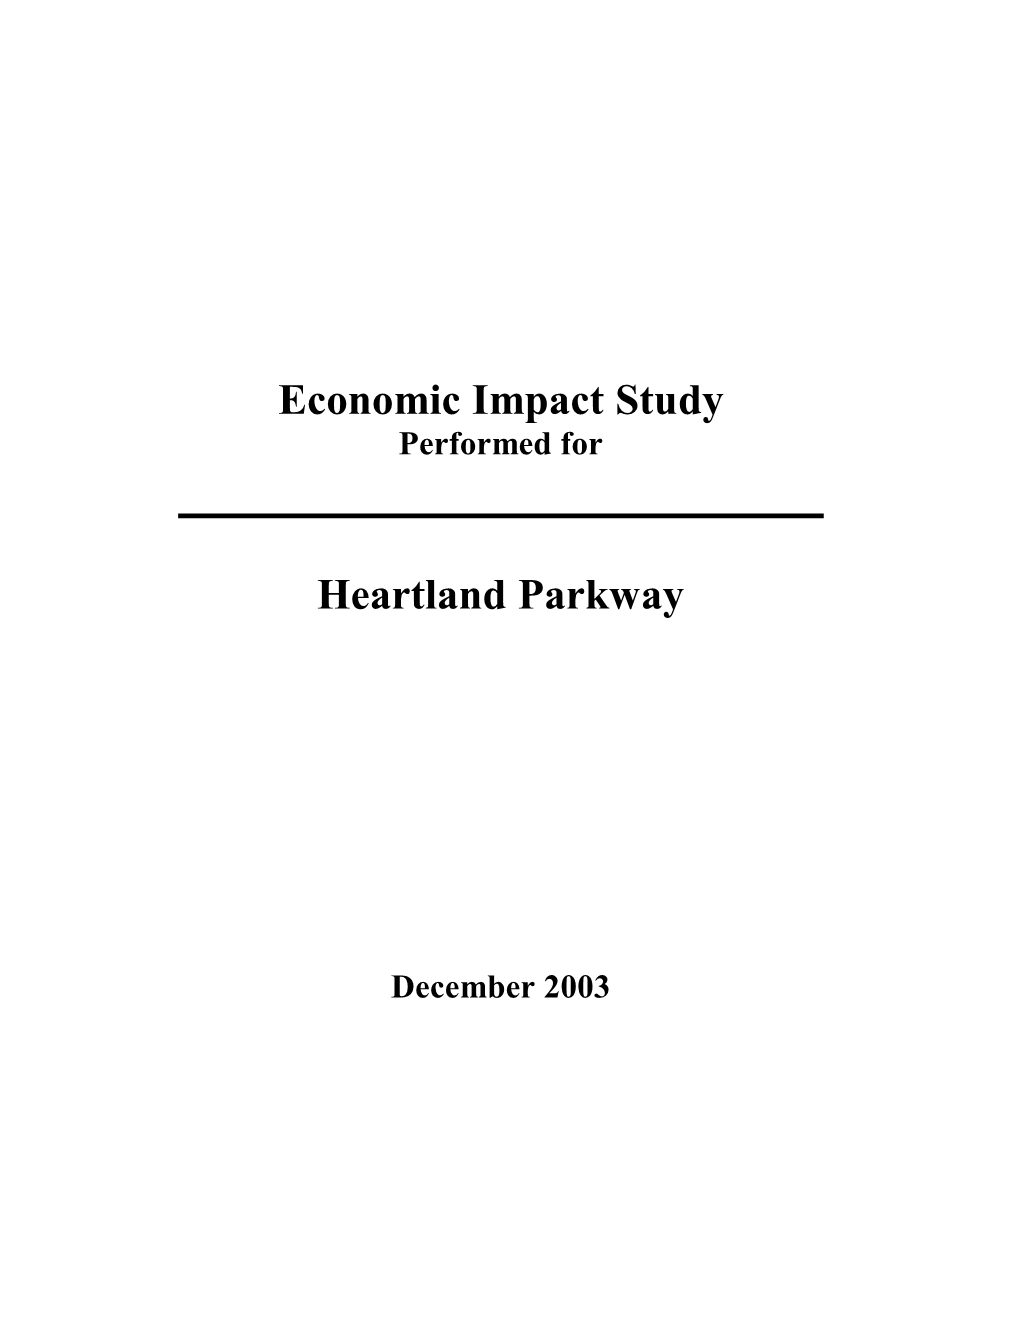 Economic Impact Study Heartland Parkway